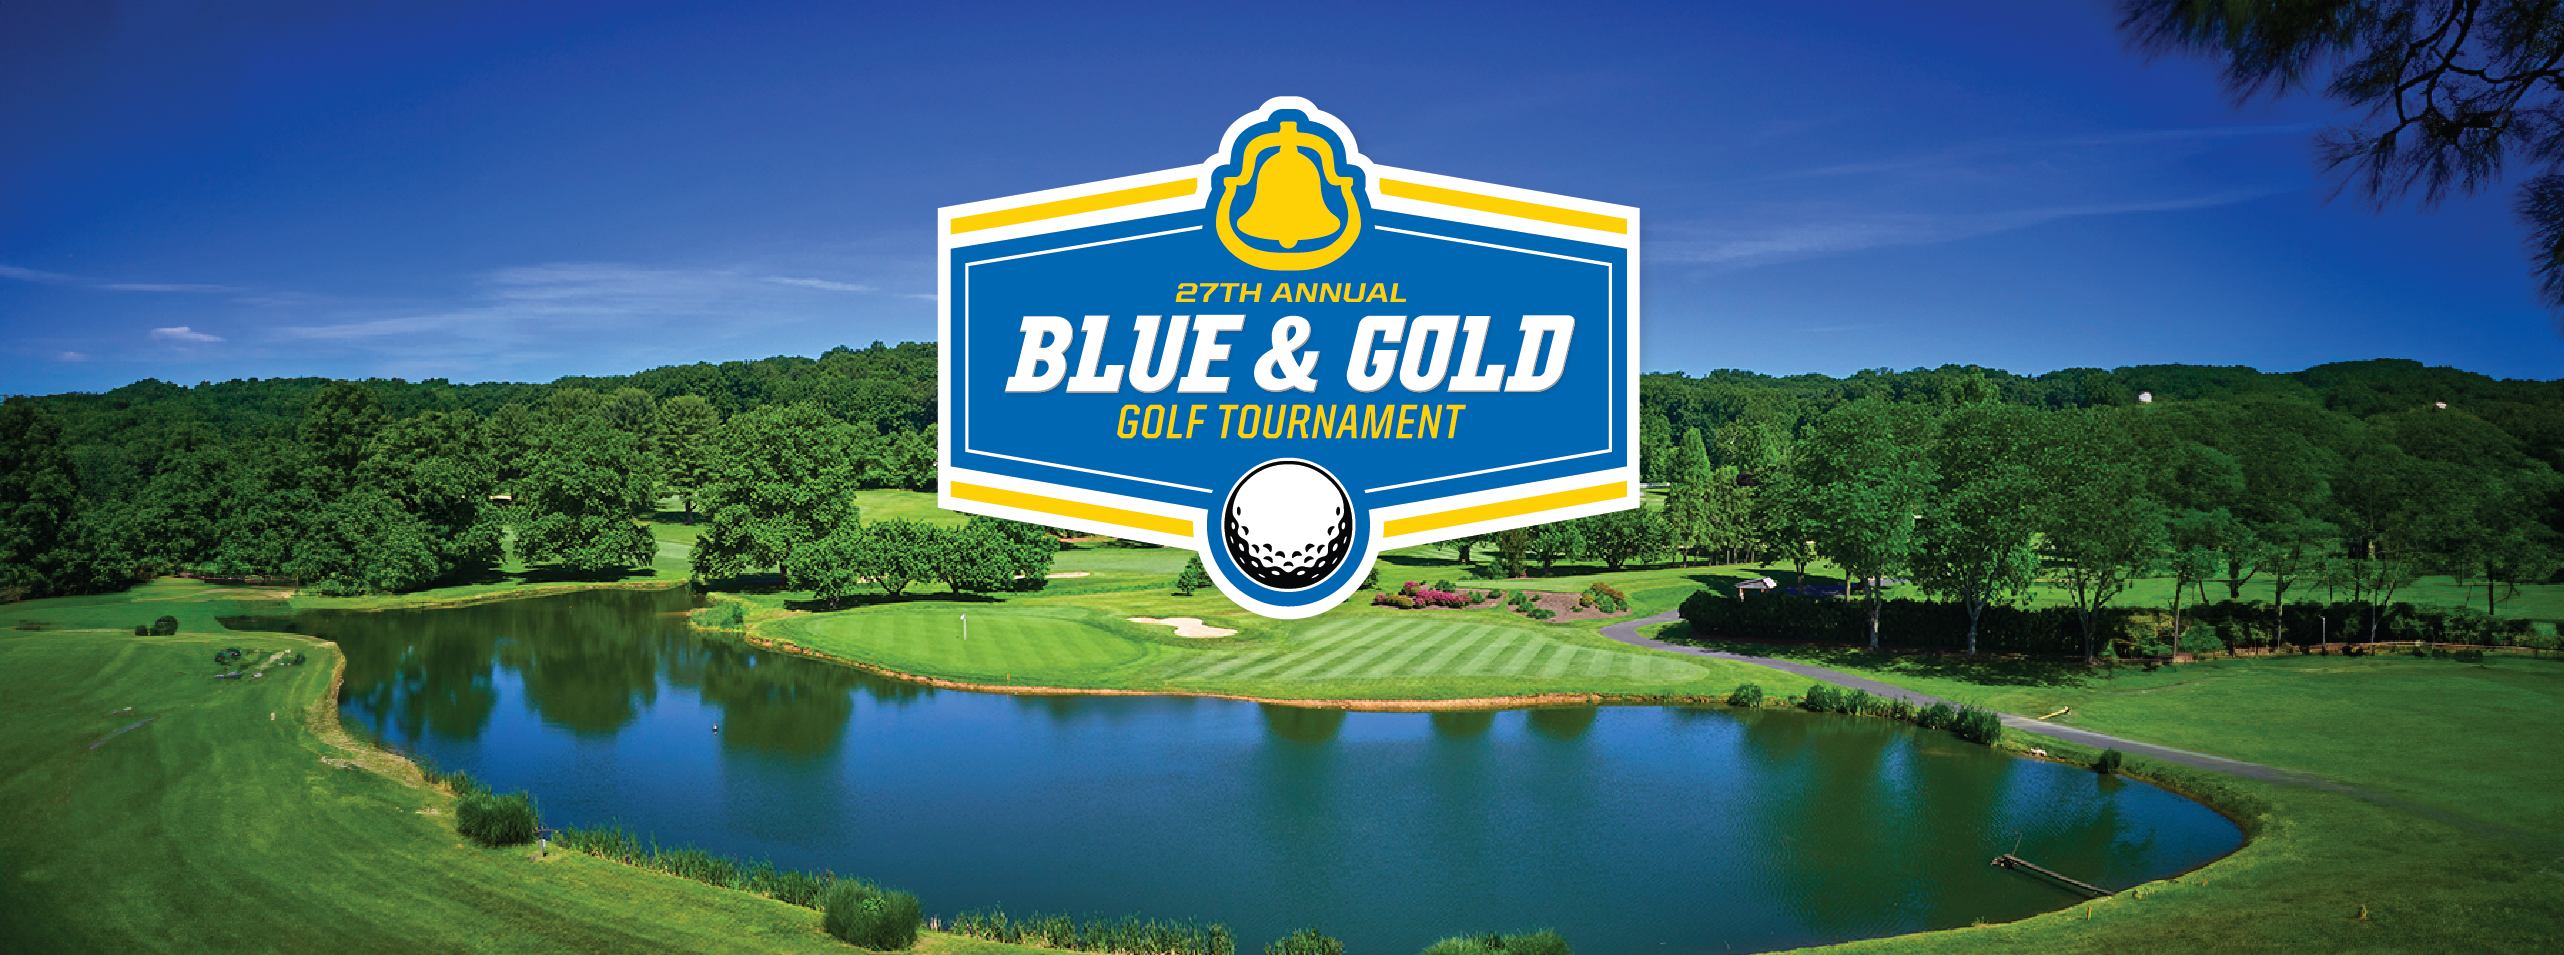 27th Blue & Gold Golf Tournament